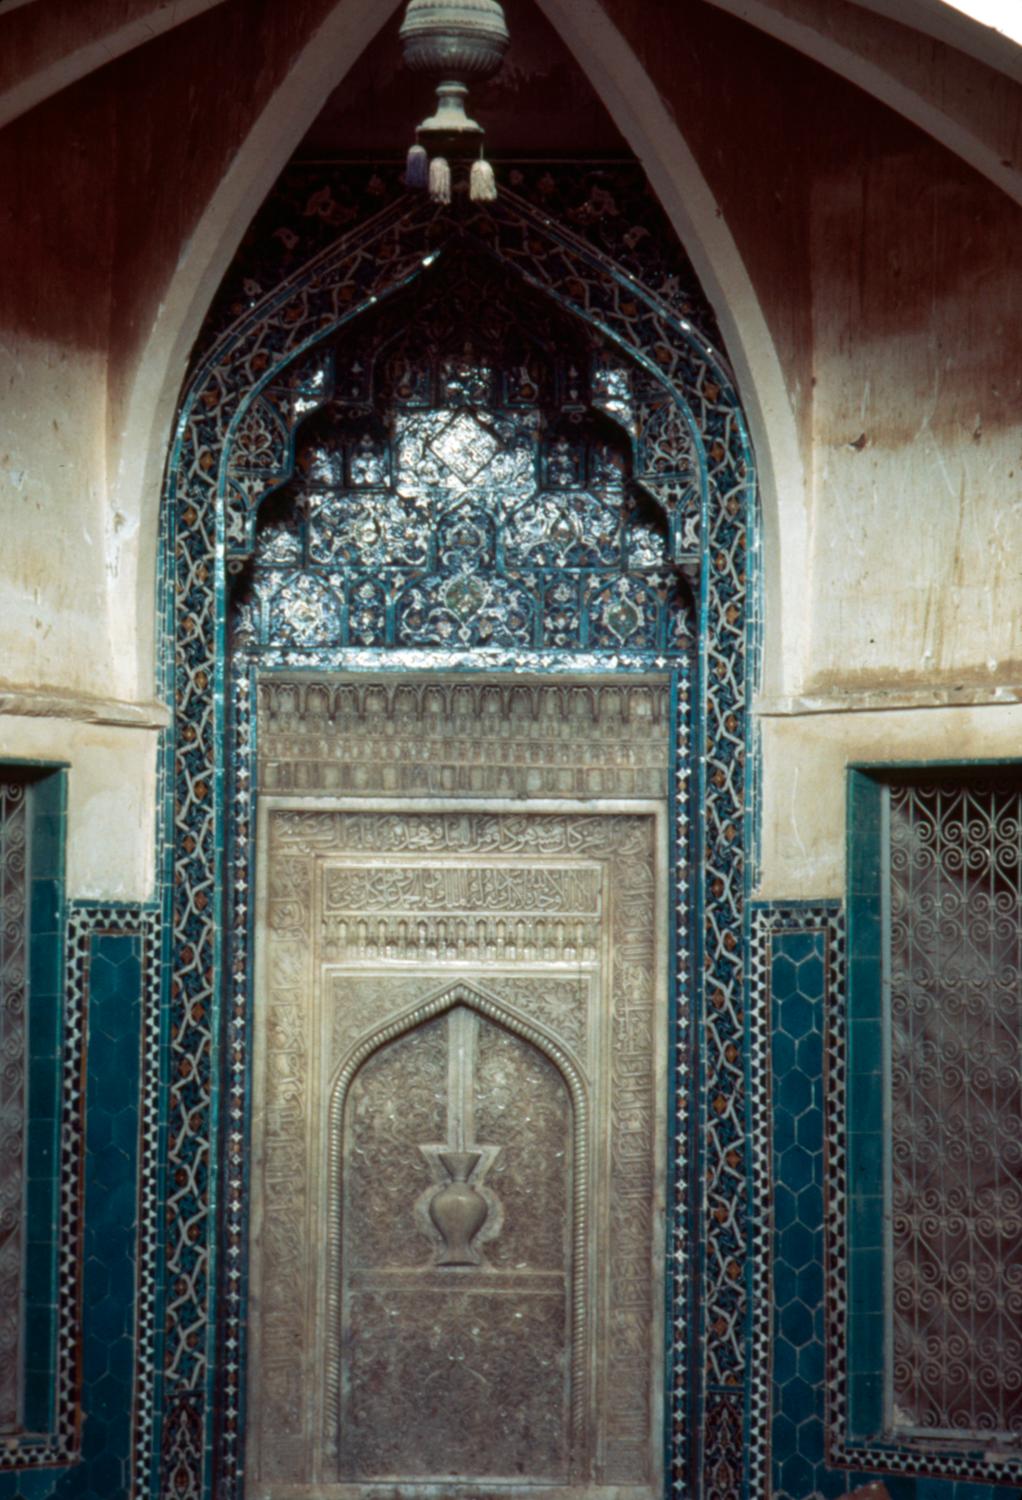 Decorative mosaic tile borders around the mihrab